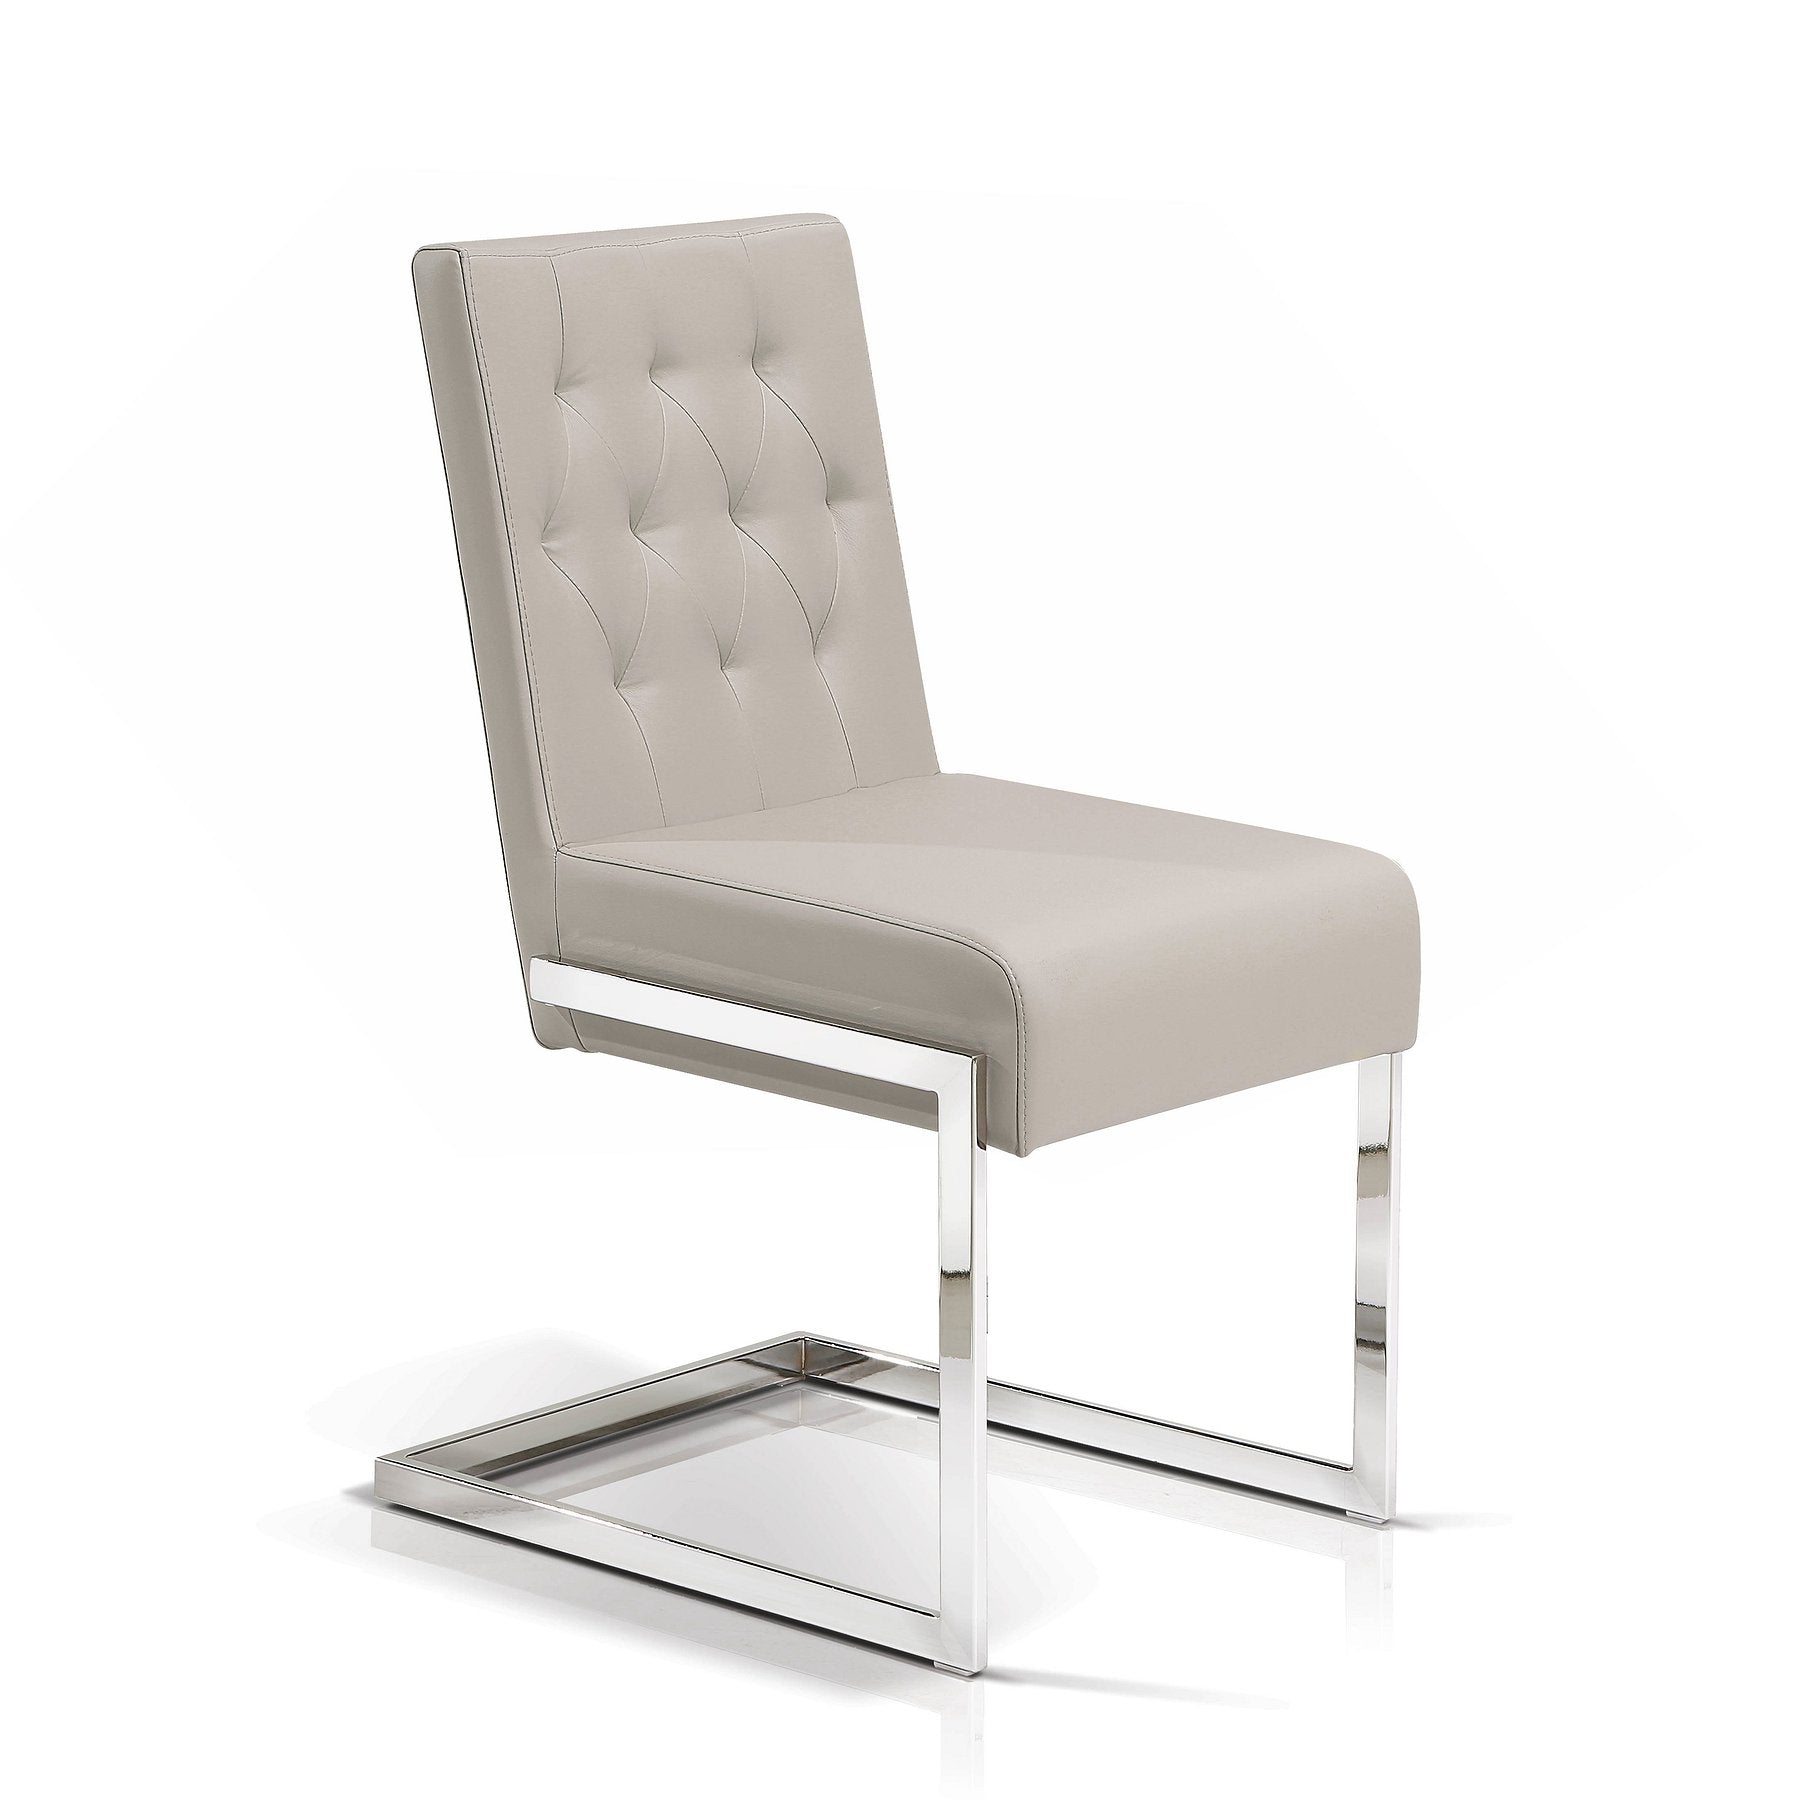 SEF413180 garbo - dining chair - Dreamart Gallery